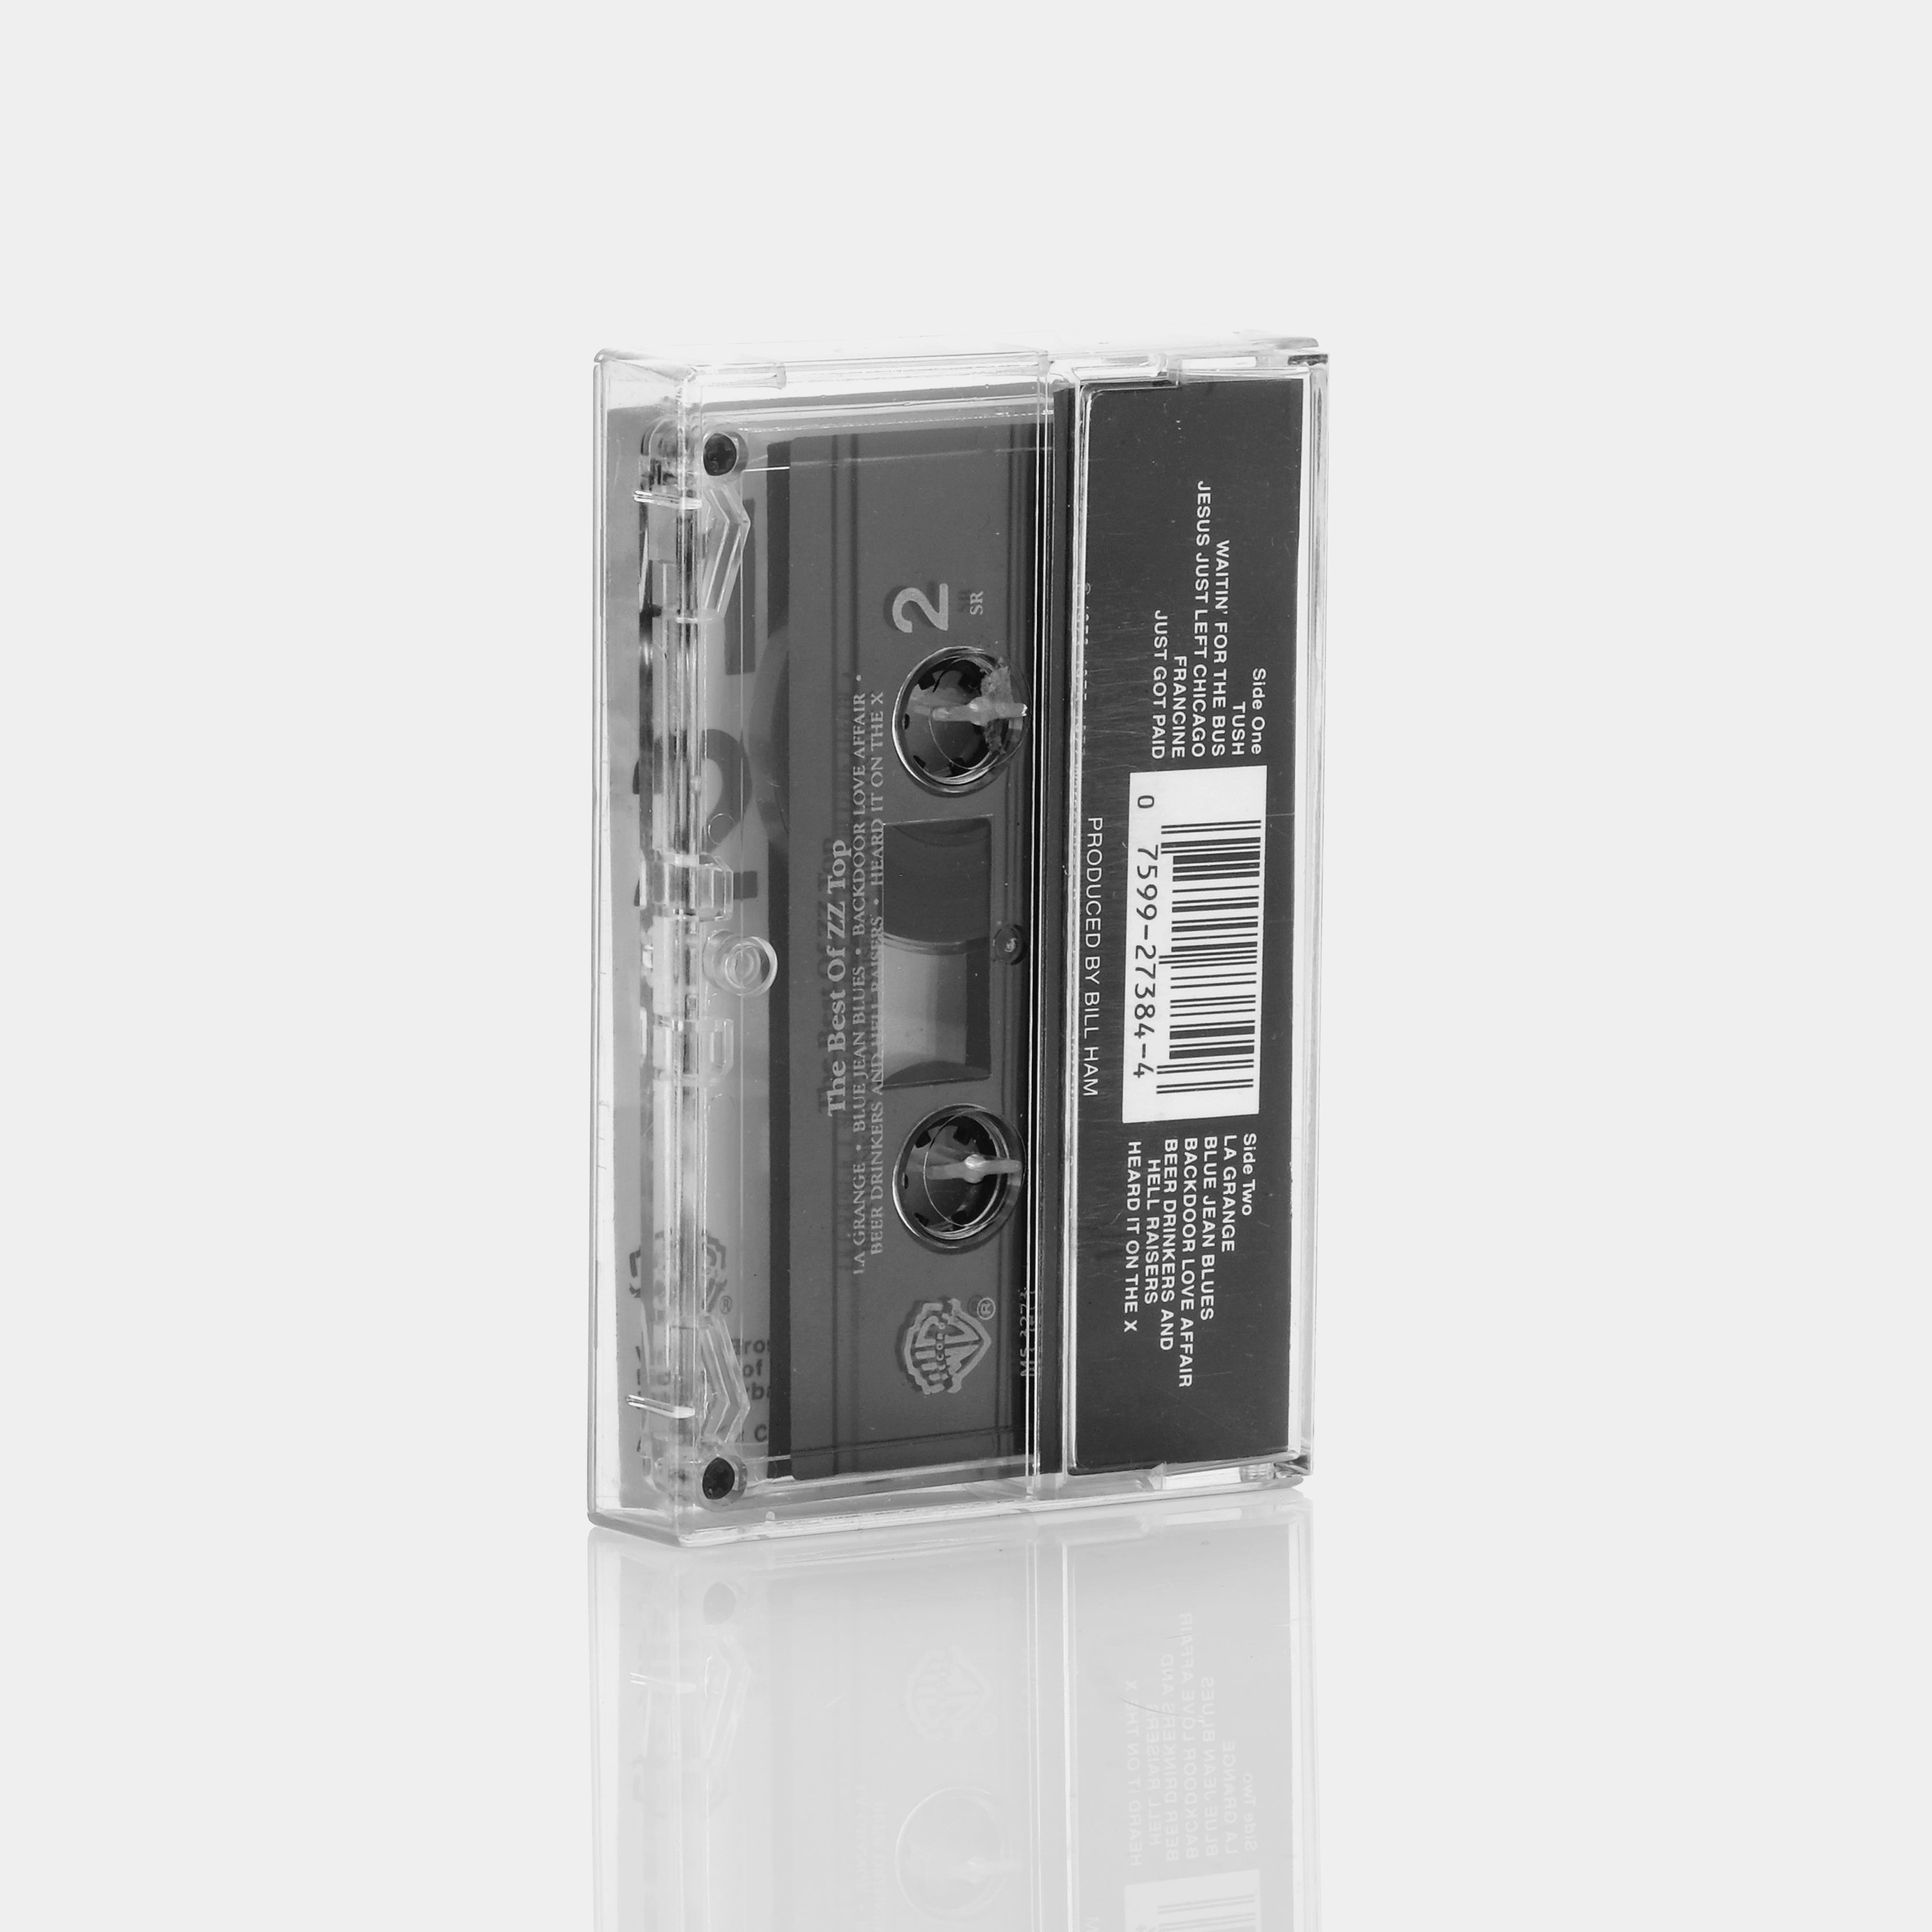 ZZ Top - The Best Of ZZ Top Cassette Tape